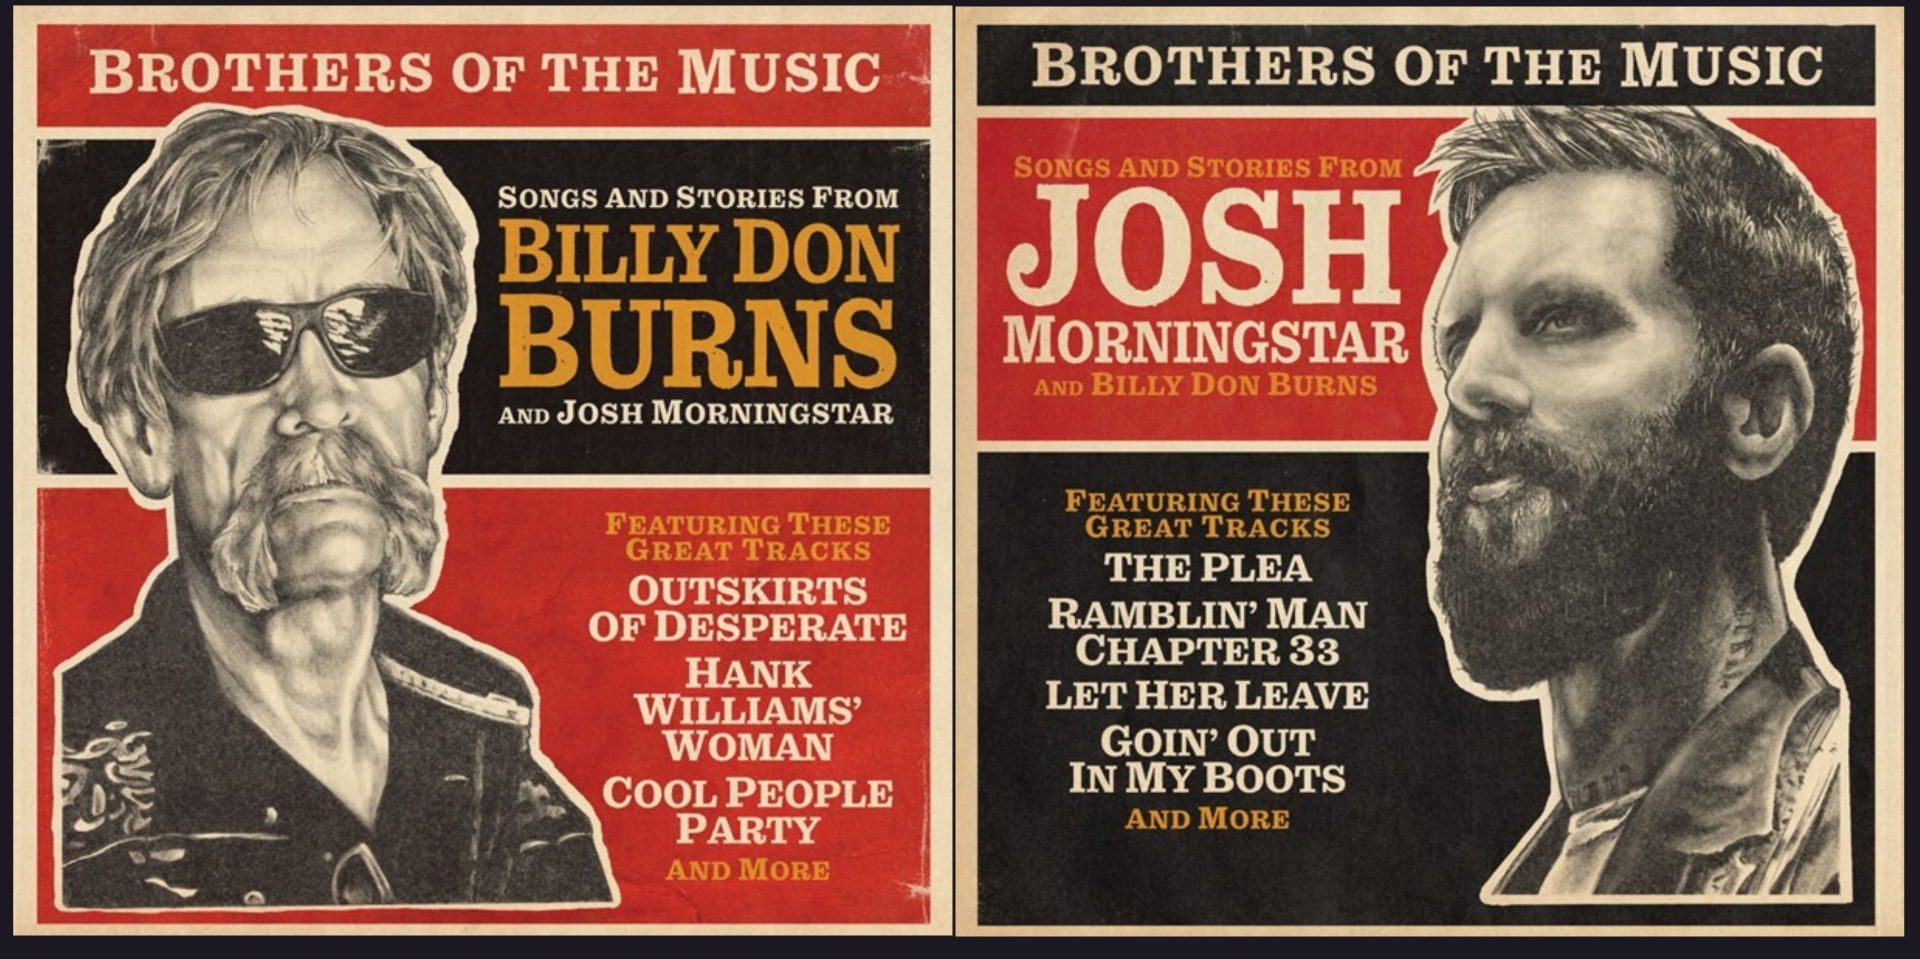 Billy Don Burns & Josh Morningstar promotional image